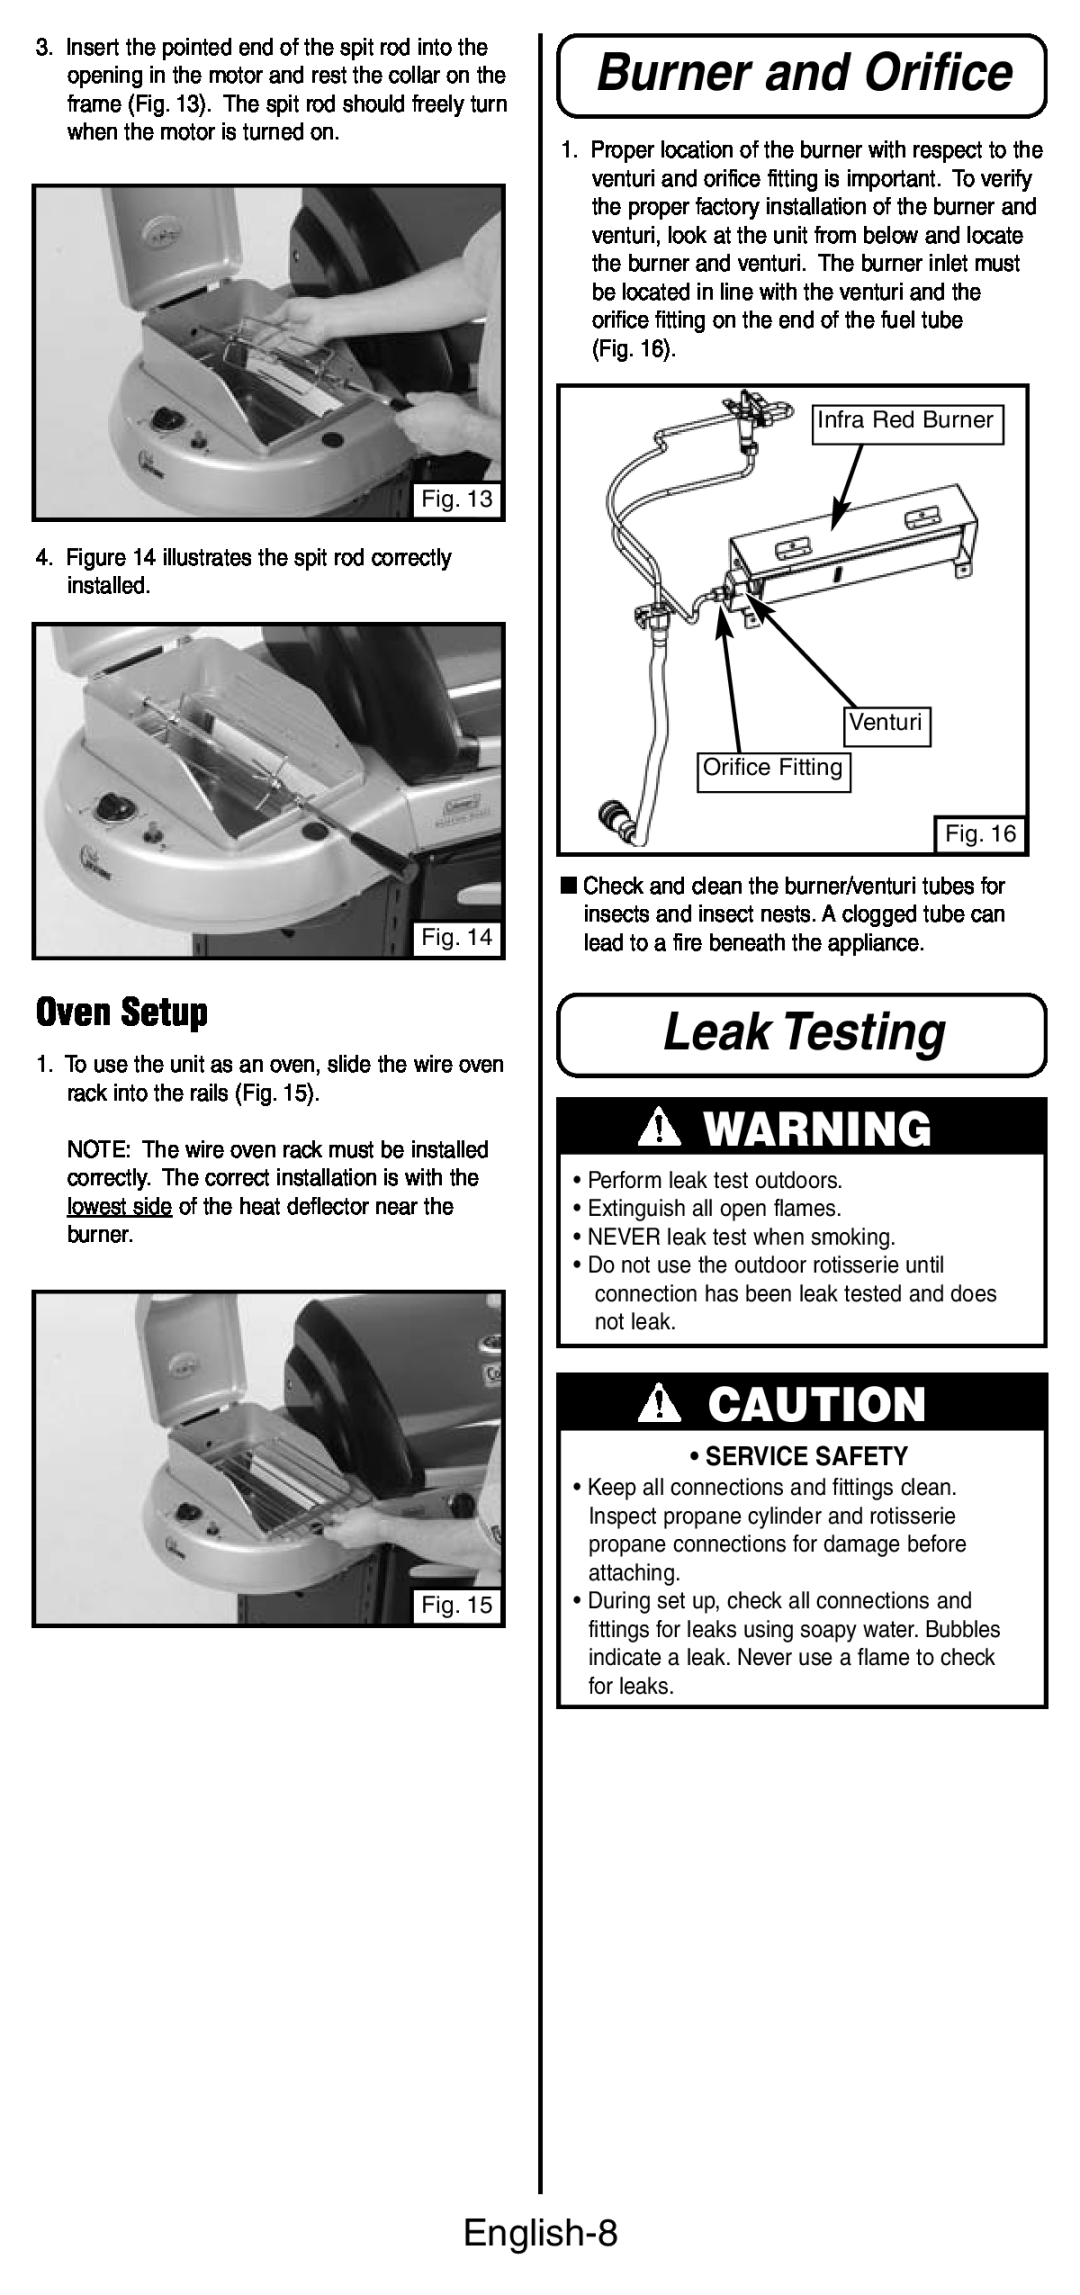 Coleman 9987 Series instruction manual Burner and Orifice, Leak Testing, Oven Setup, English-8, Service Safety 